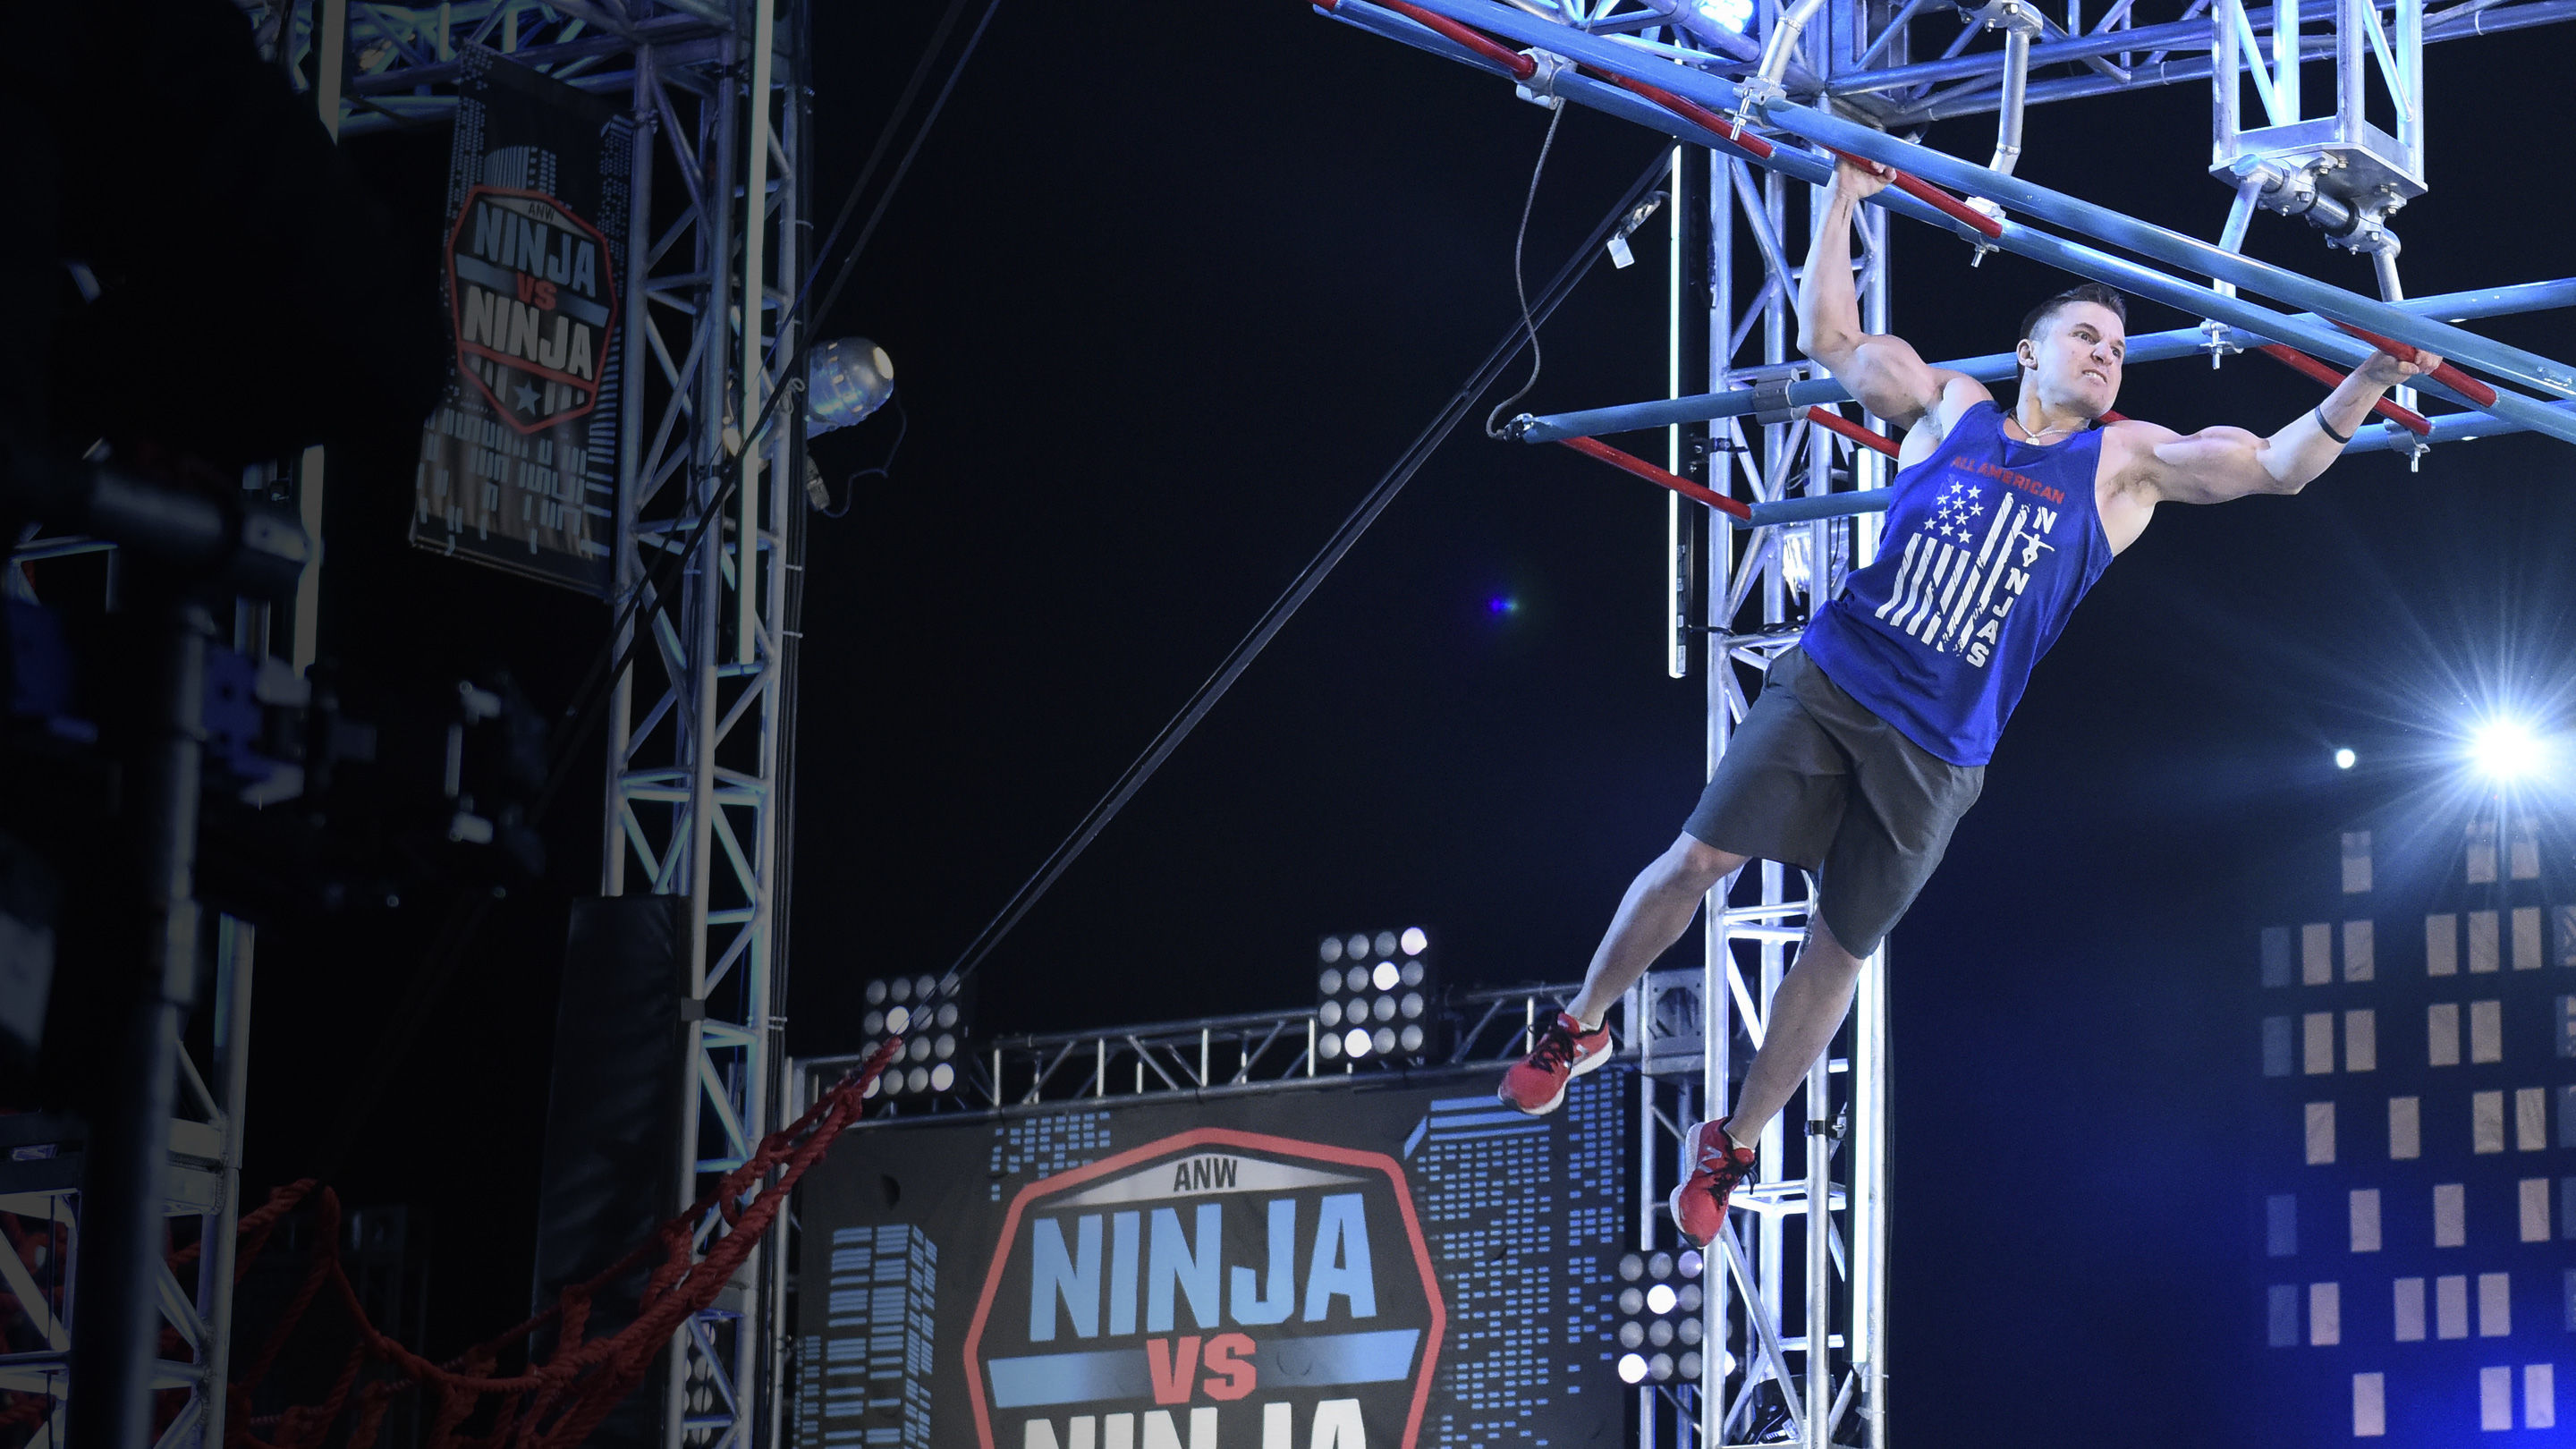 American Ninja Warrior: Ninja vs Ninja S1E3 Qualifying Episode 3